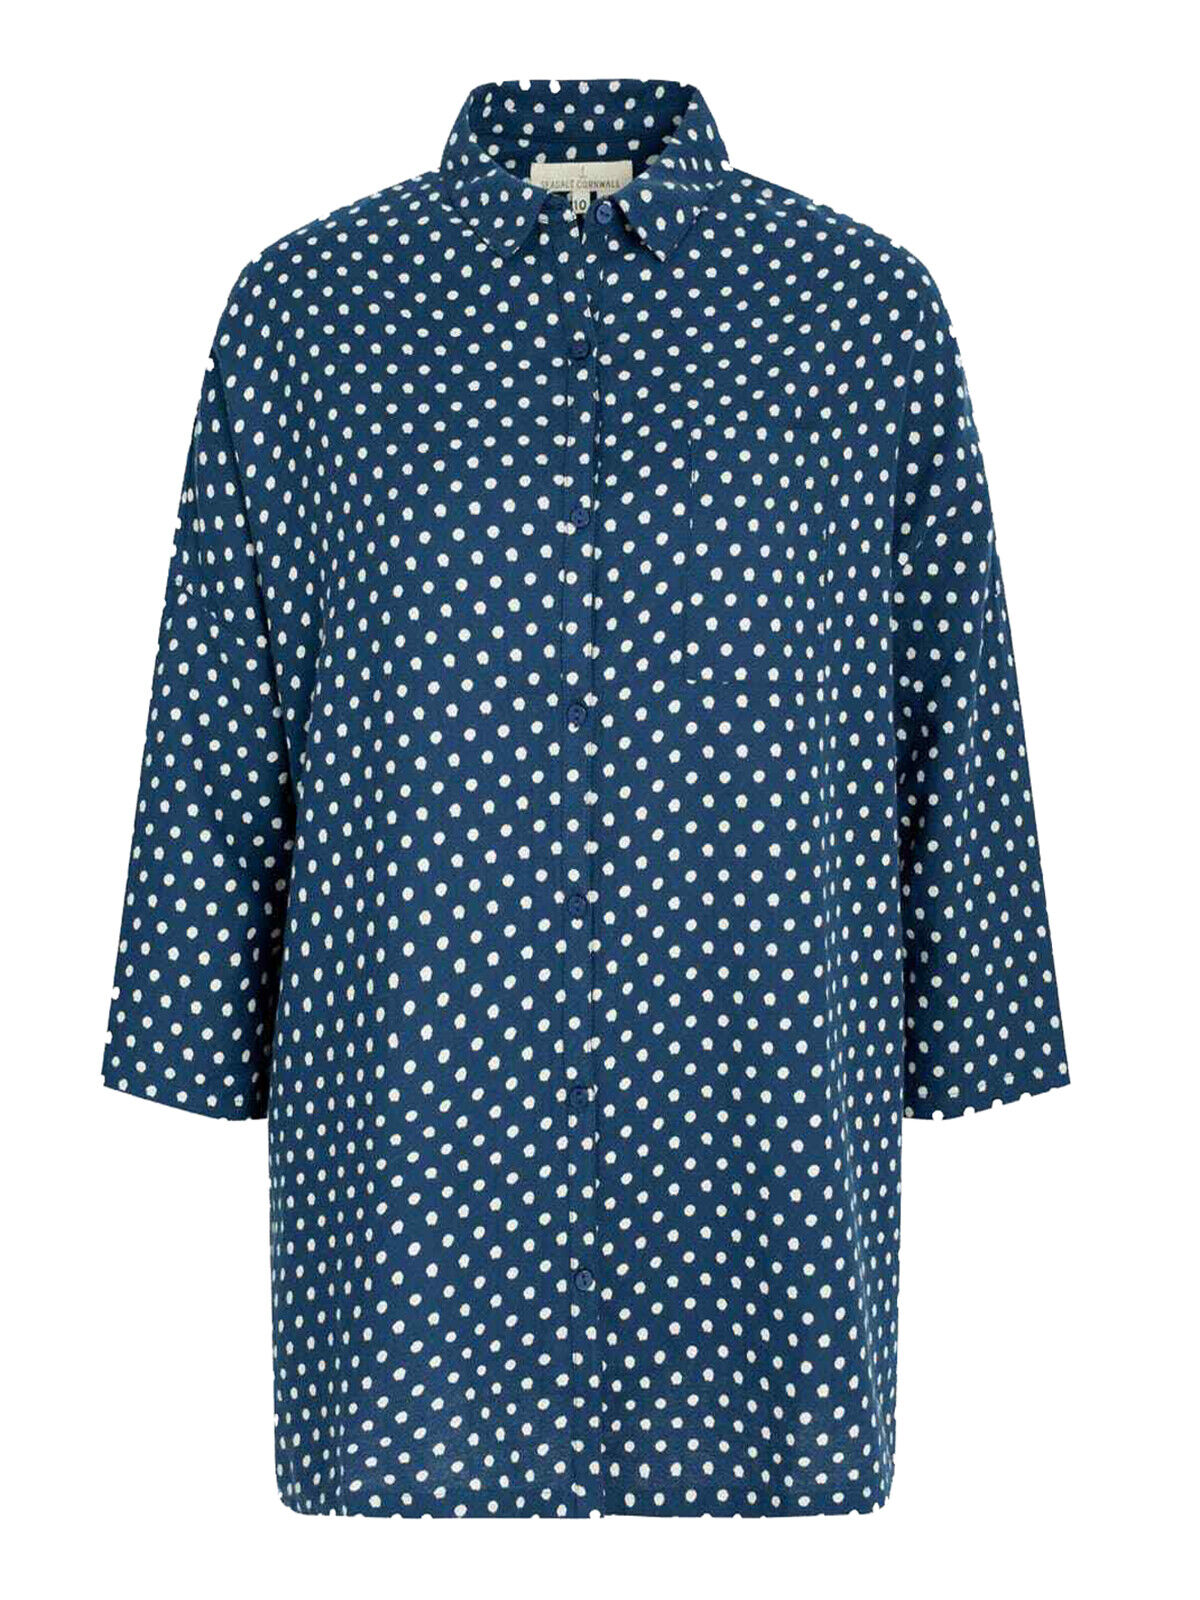 EX SEASALT Navy Polka Dot Harbour Carn Towan Shirt in Size 10 RRP £55